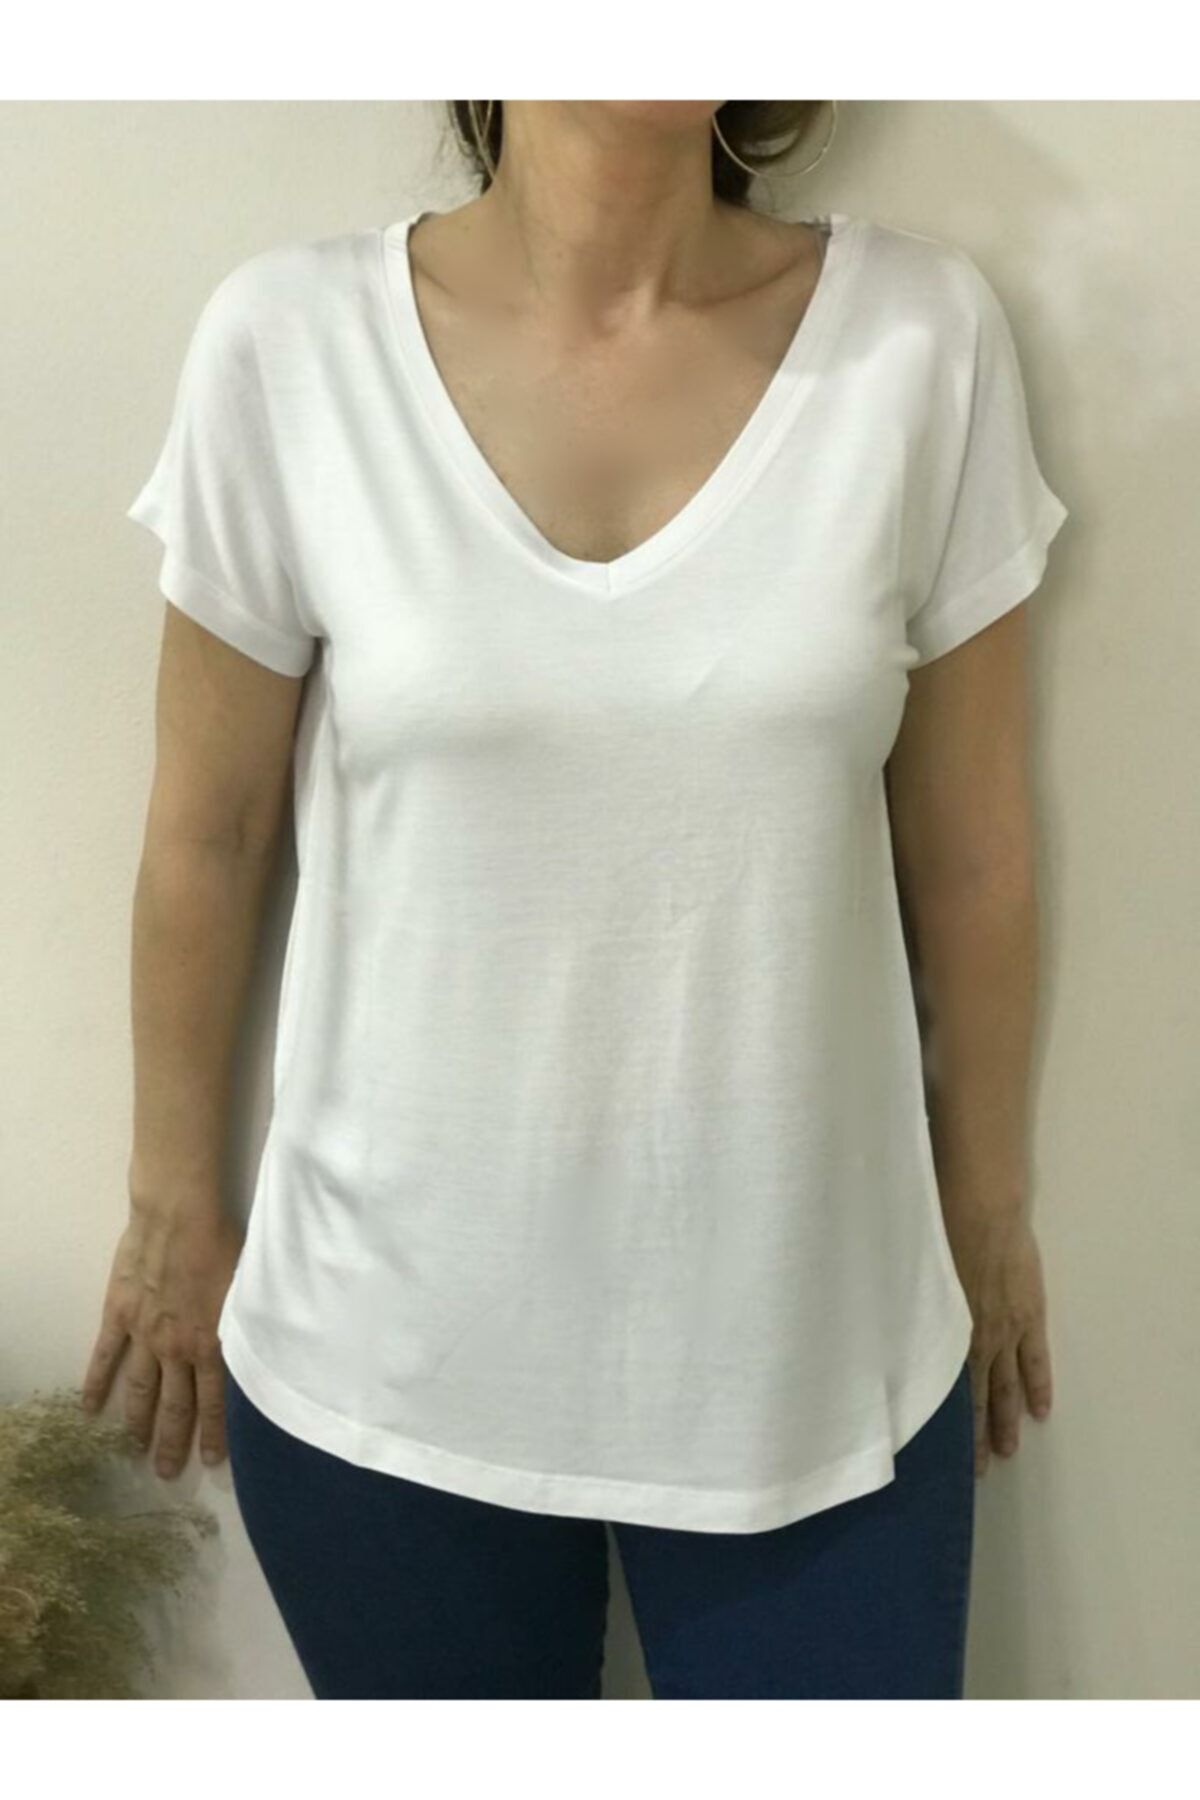 SİSTERS2HC Kadın Beyaz V Yaka Düşük Kol Yırtmaçlı T-shirt